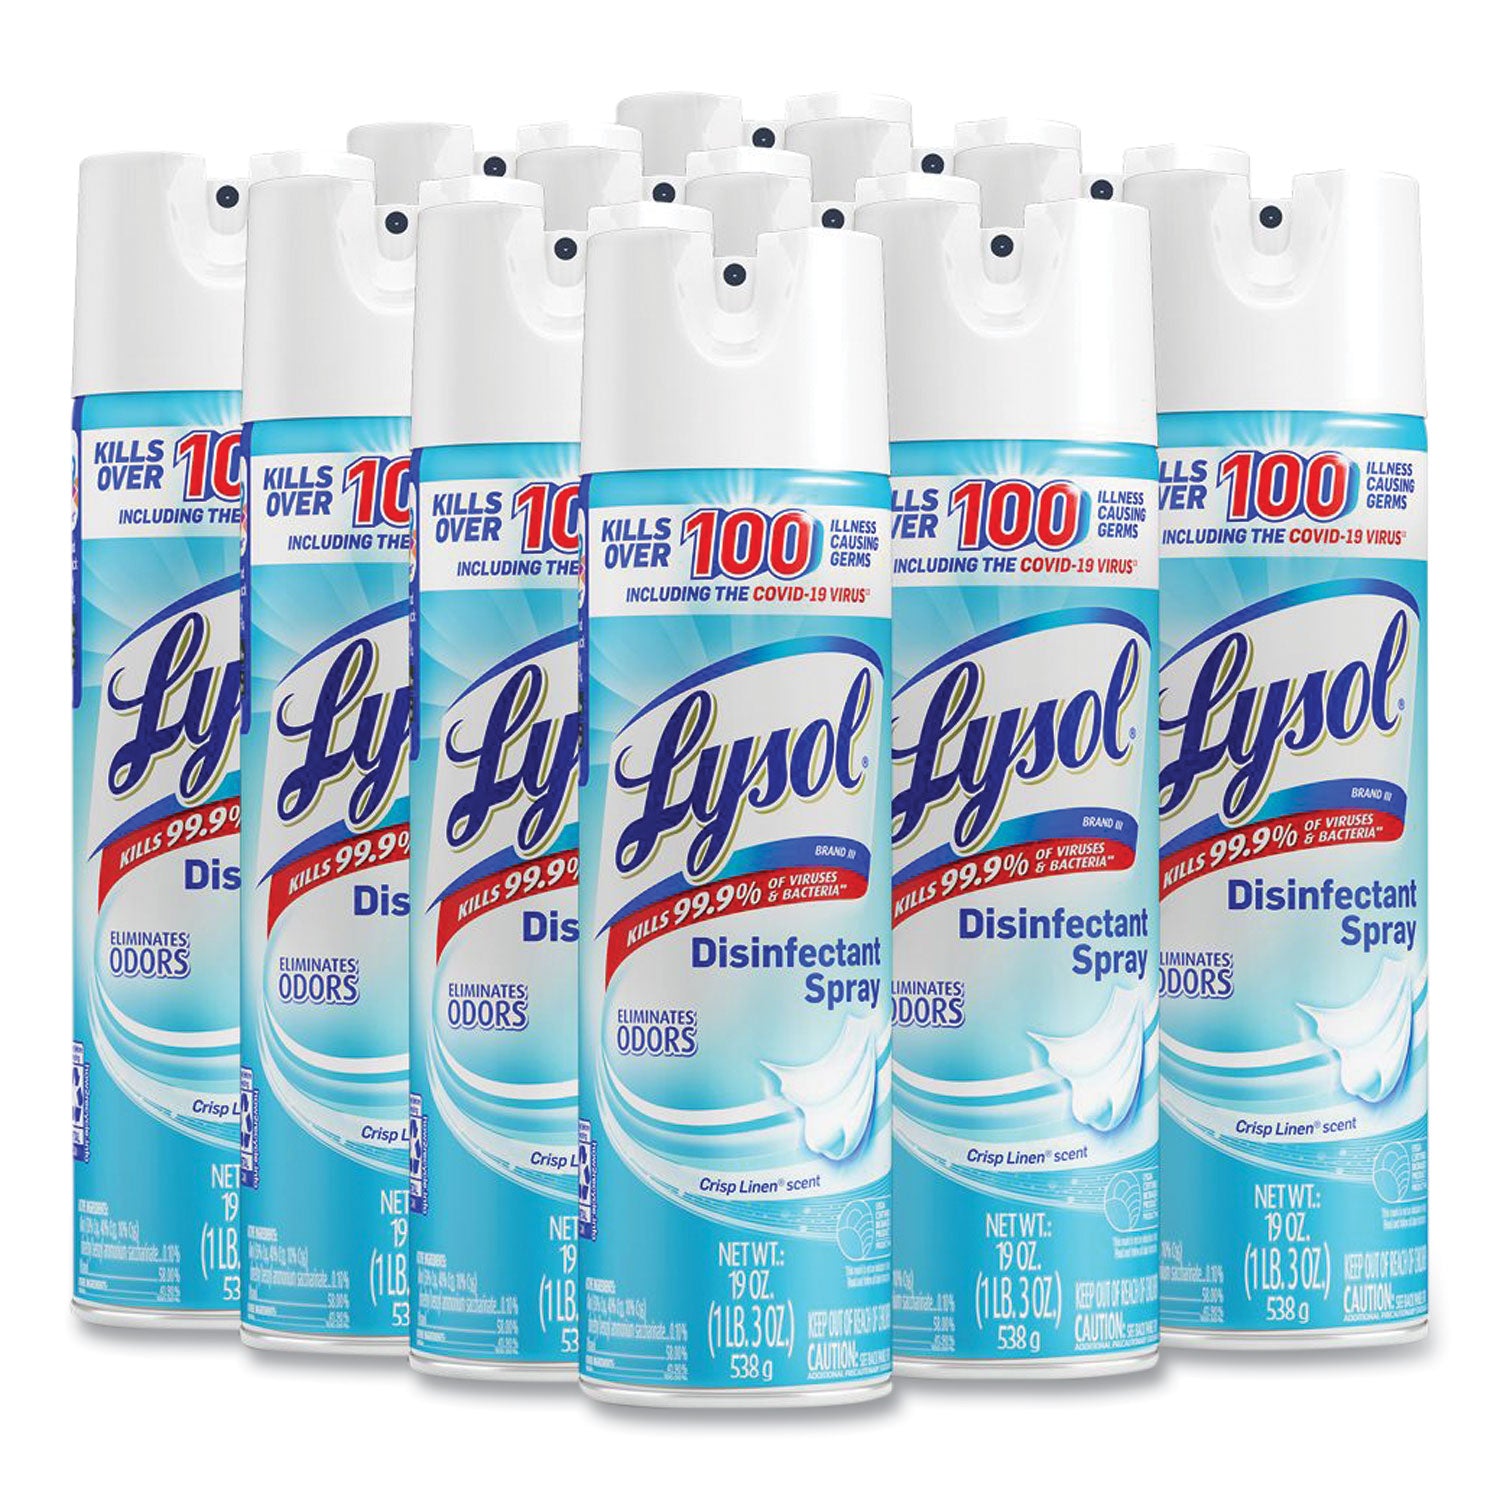 Disinfectant Spray, Crisp Linen Scent, 19 oz Aerosol Spray - 2